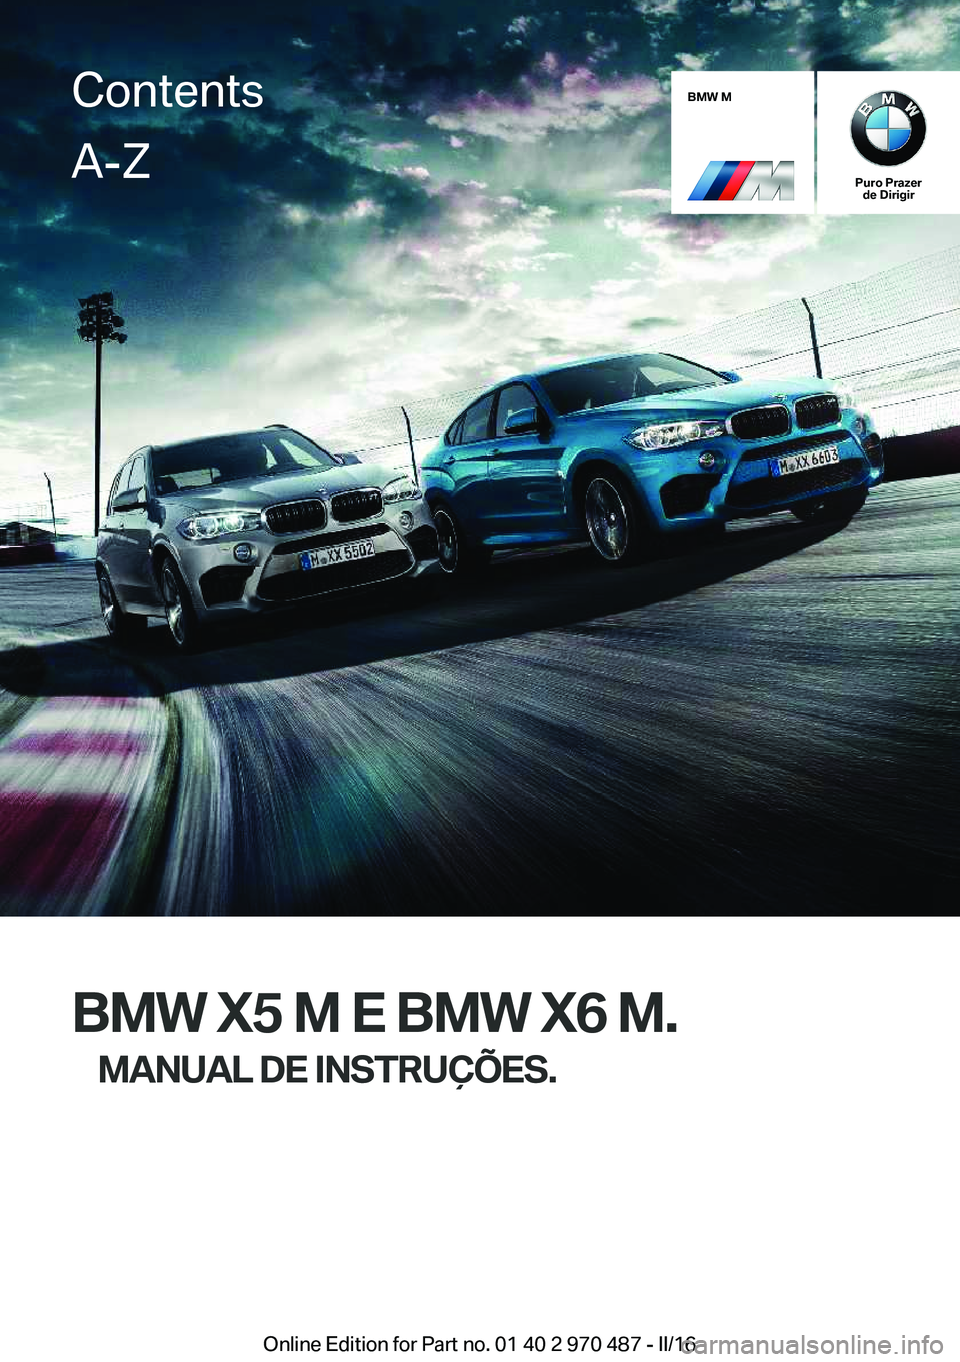 BMW X5 M 2016  Manual do condutor (in Portuguese) BMW M
Puro Prazerde Dirigir
BMW X5 M E BMW X6 M.
MANUAL DE INSTRUÇÕES.
ContentsA-Z
Online Edition for Part no. 01 40 2 970 487 - II/16   